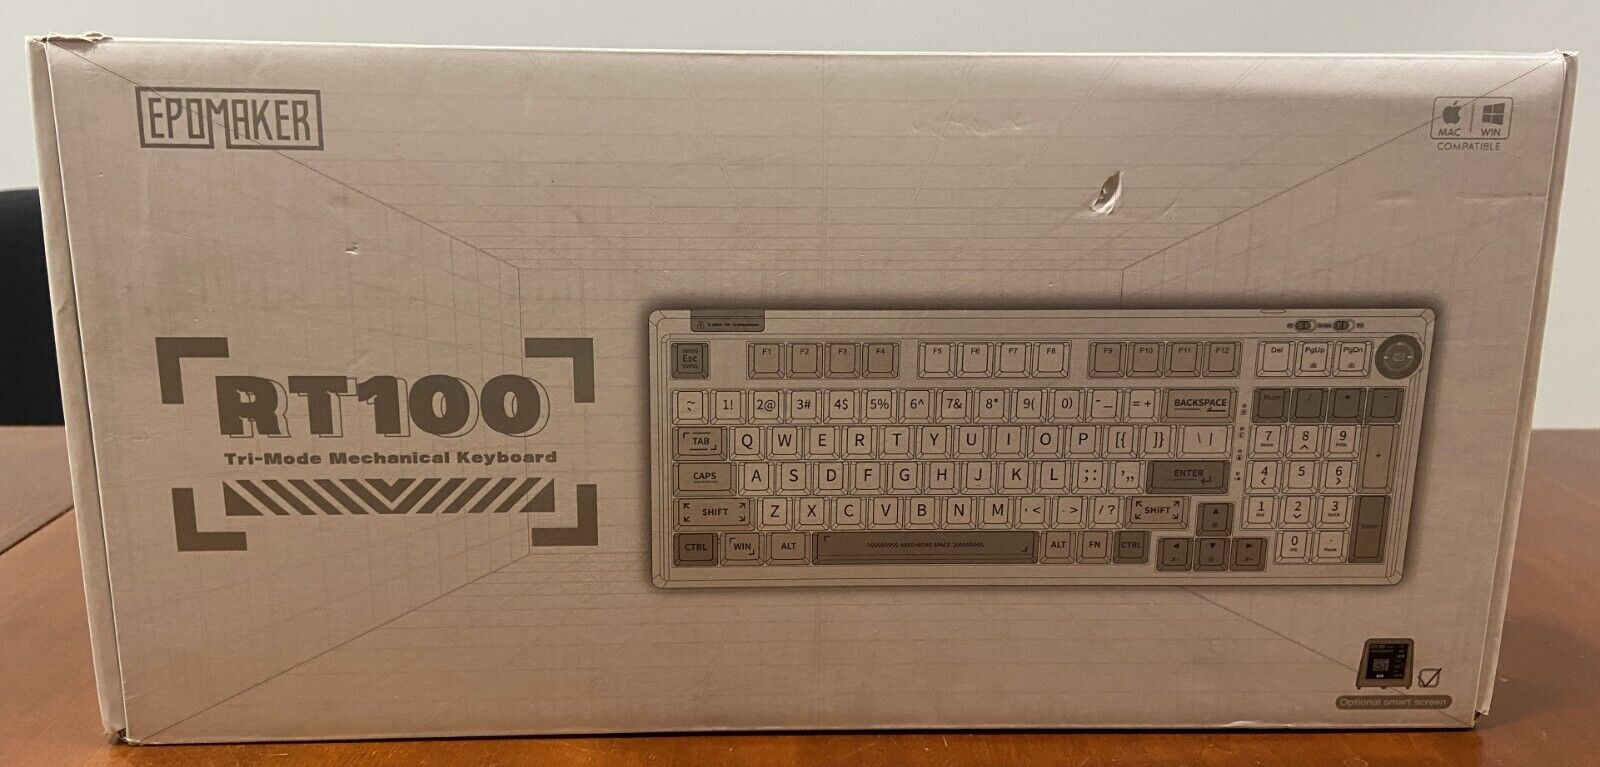 EPOMAKER RT100 Mechanical Keyboard, Retro Gaming Keyboard, with Display Screen. 